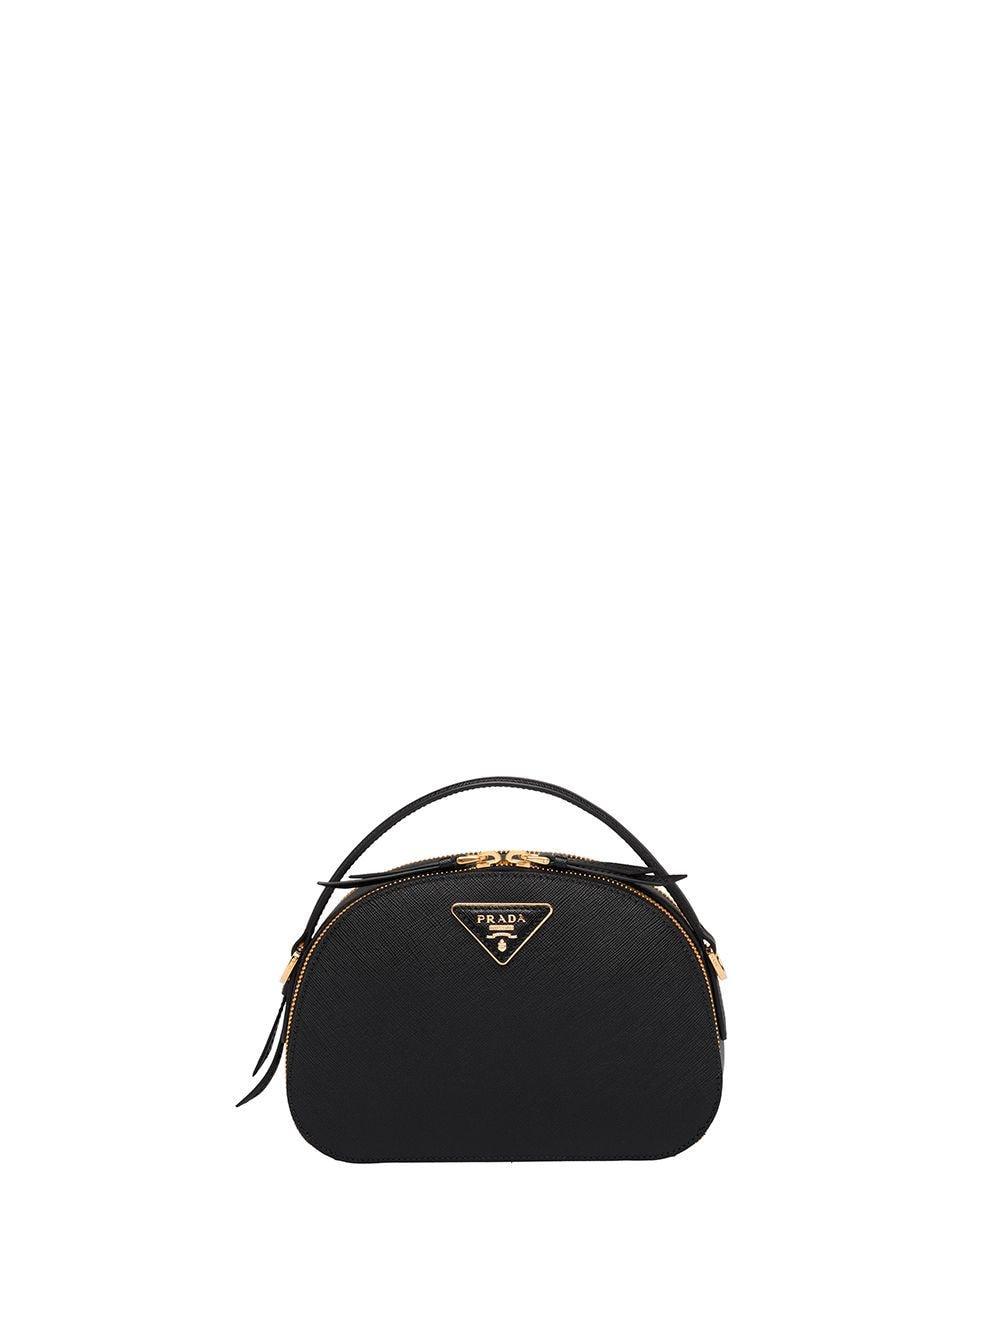 Prada Odette Leather Cross-body Bag in Black | Lyst